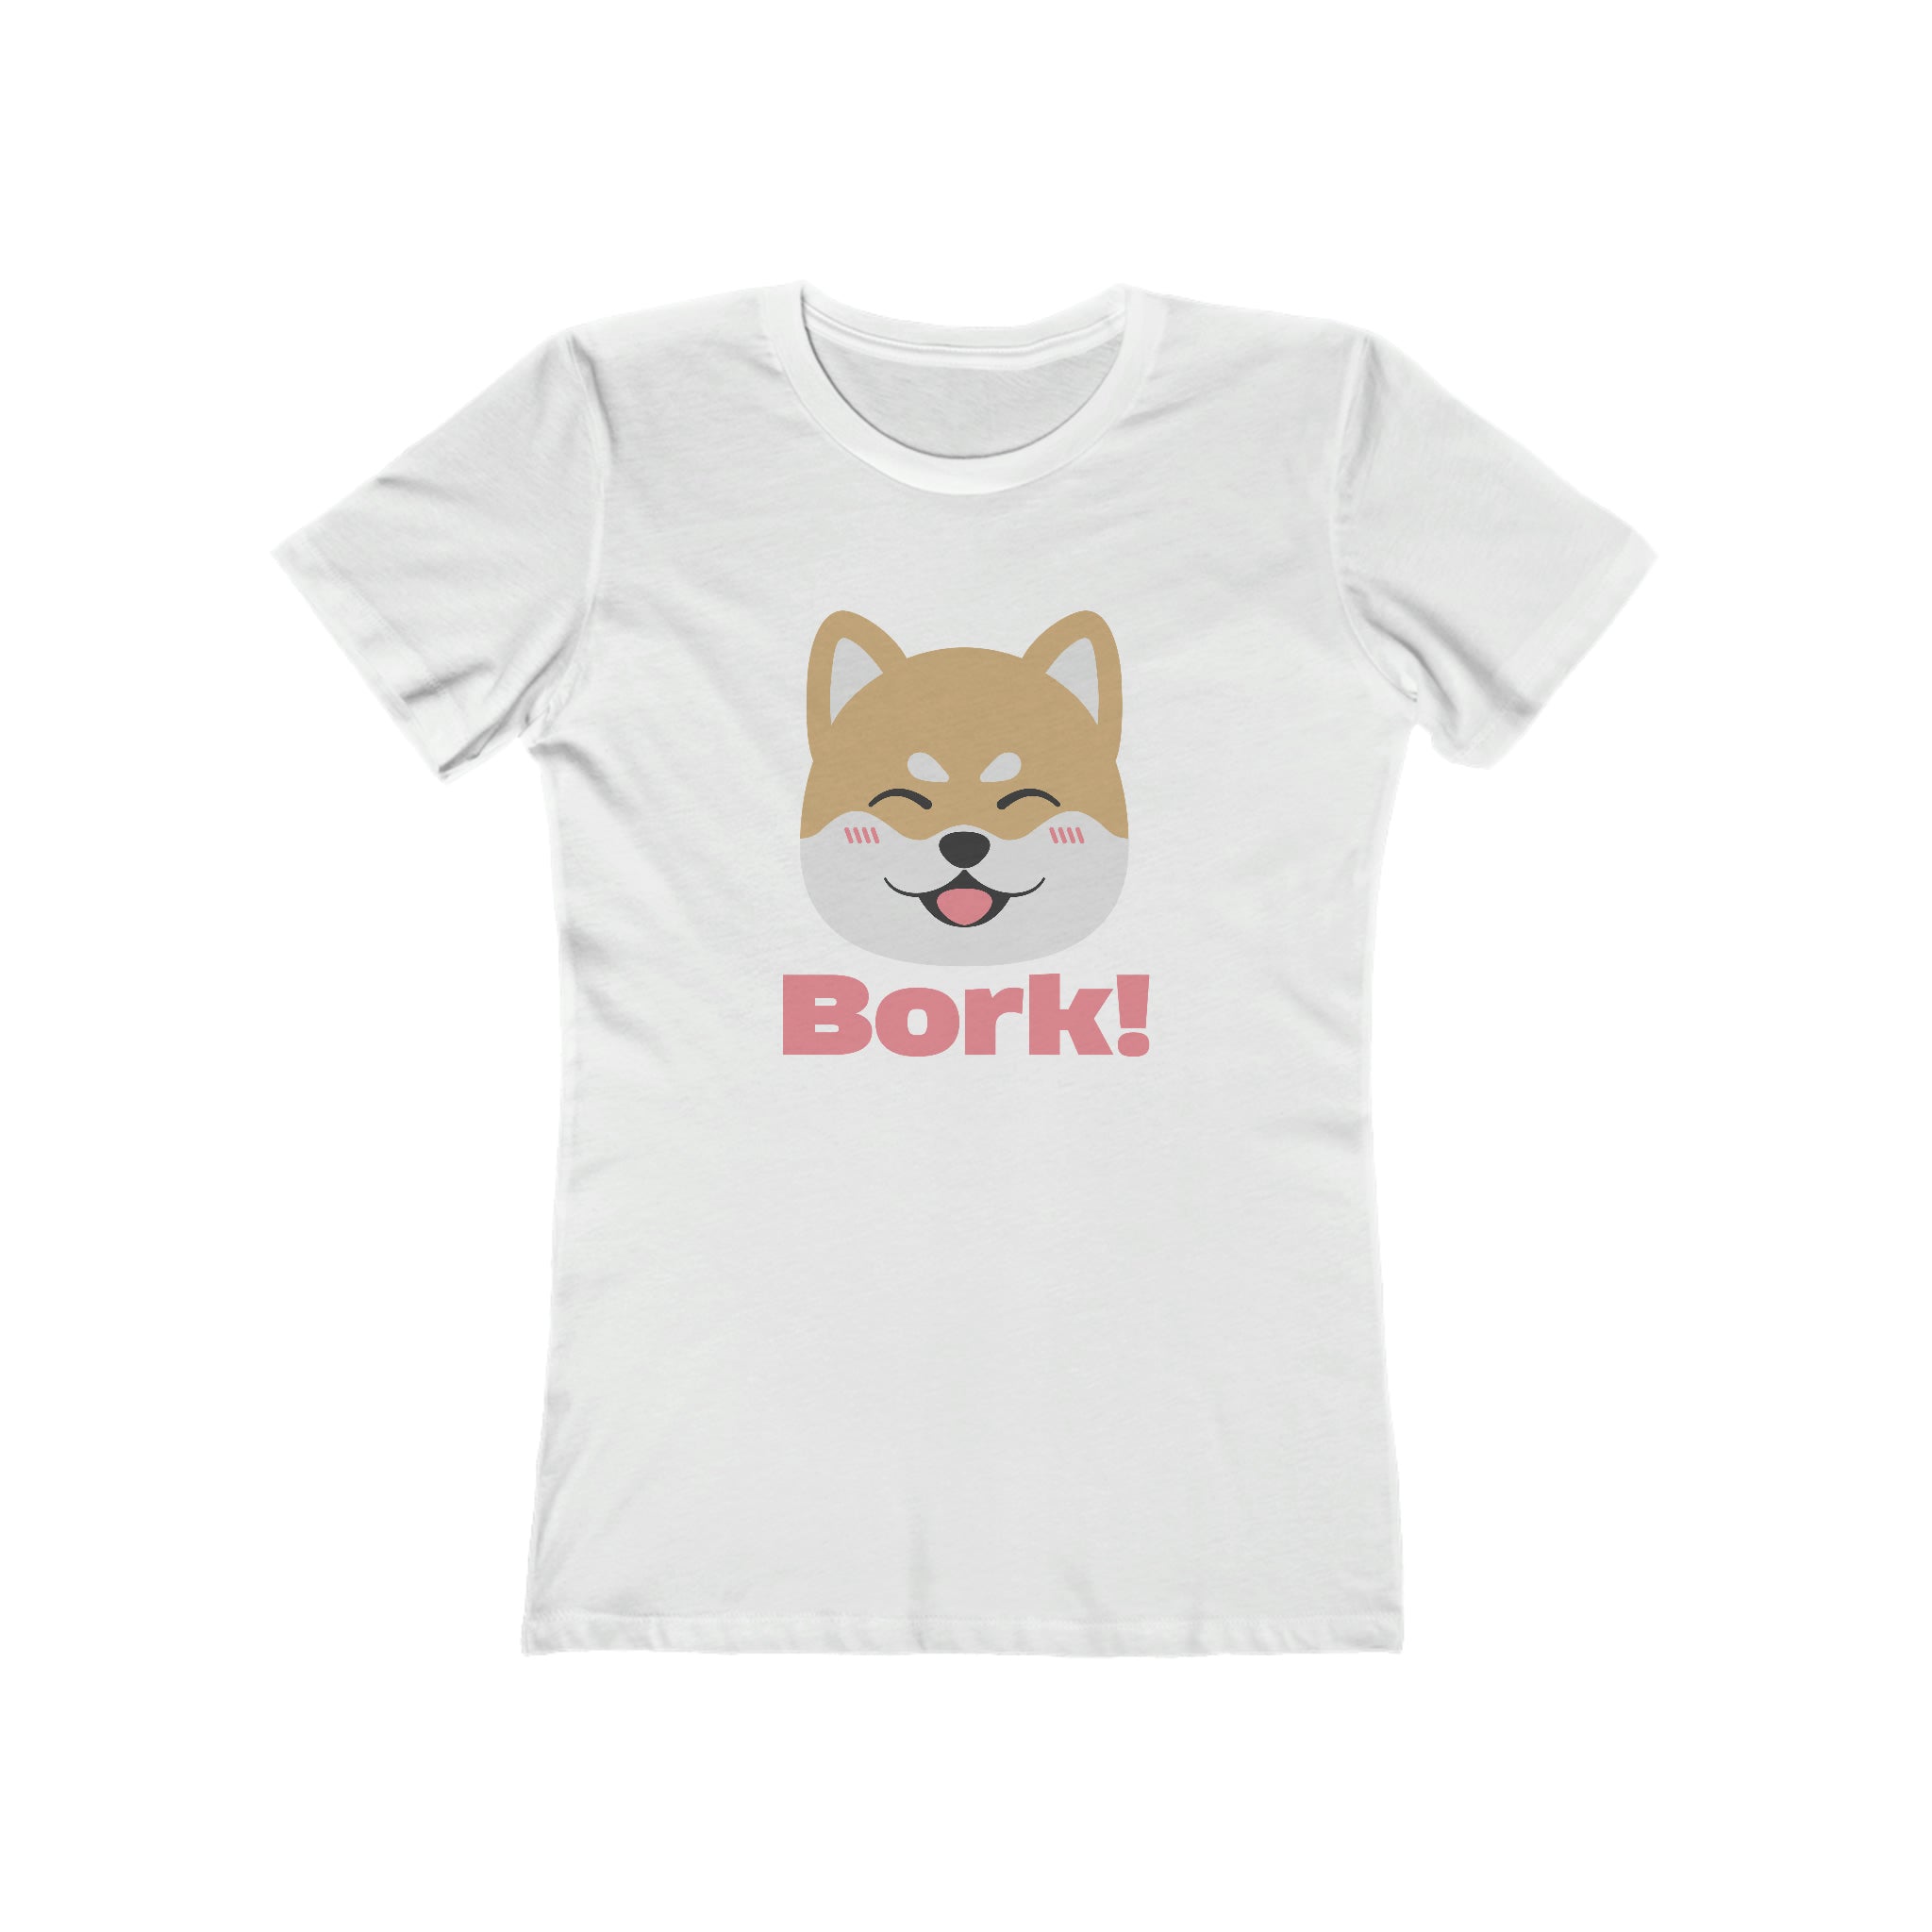 BORK : Women's 100% Cotton T-Shirt